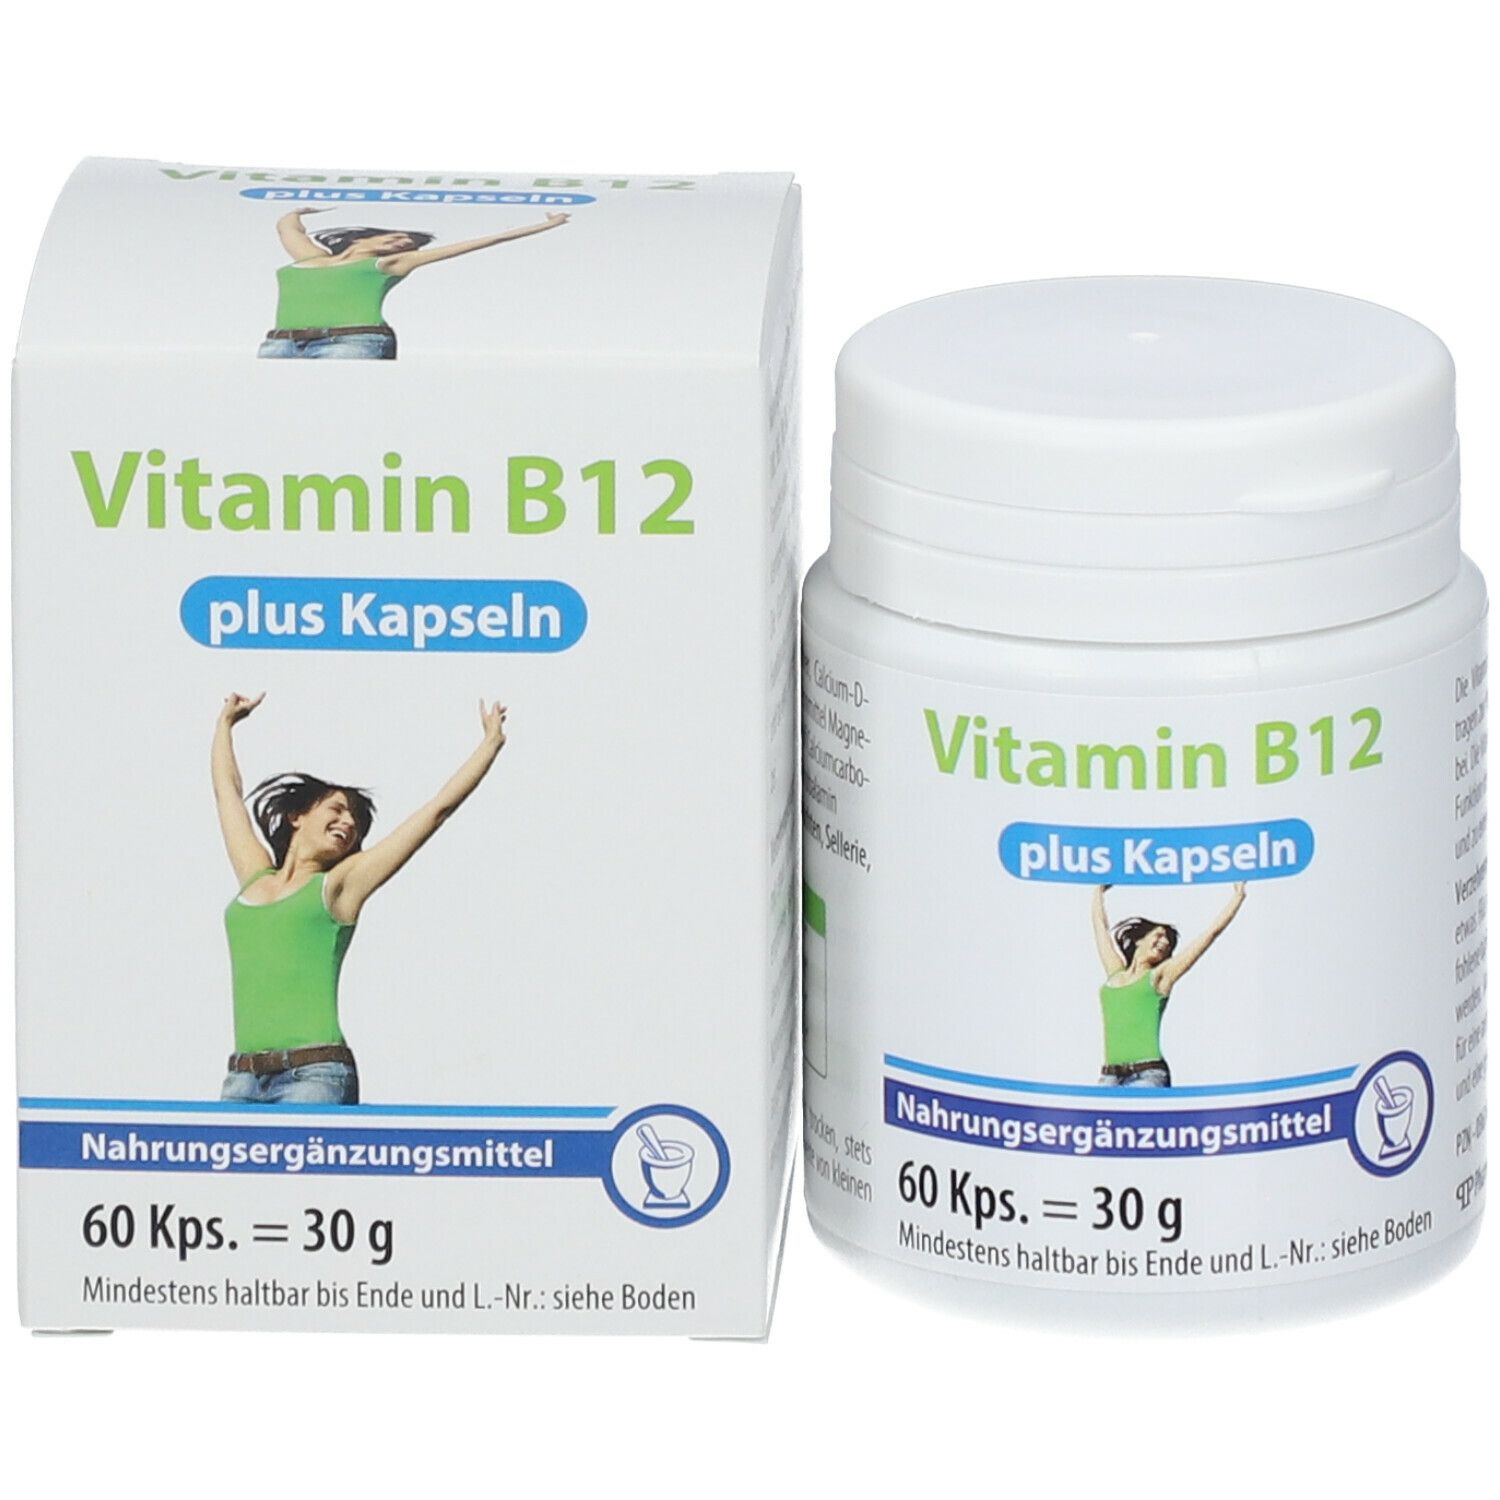 Vitamin B12 Plus Kapseln